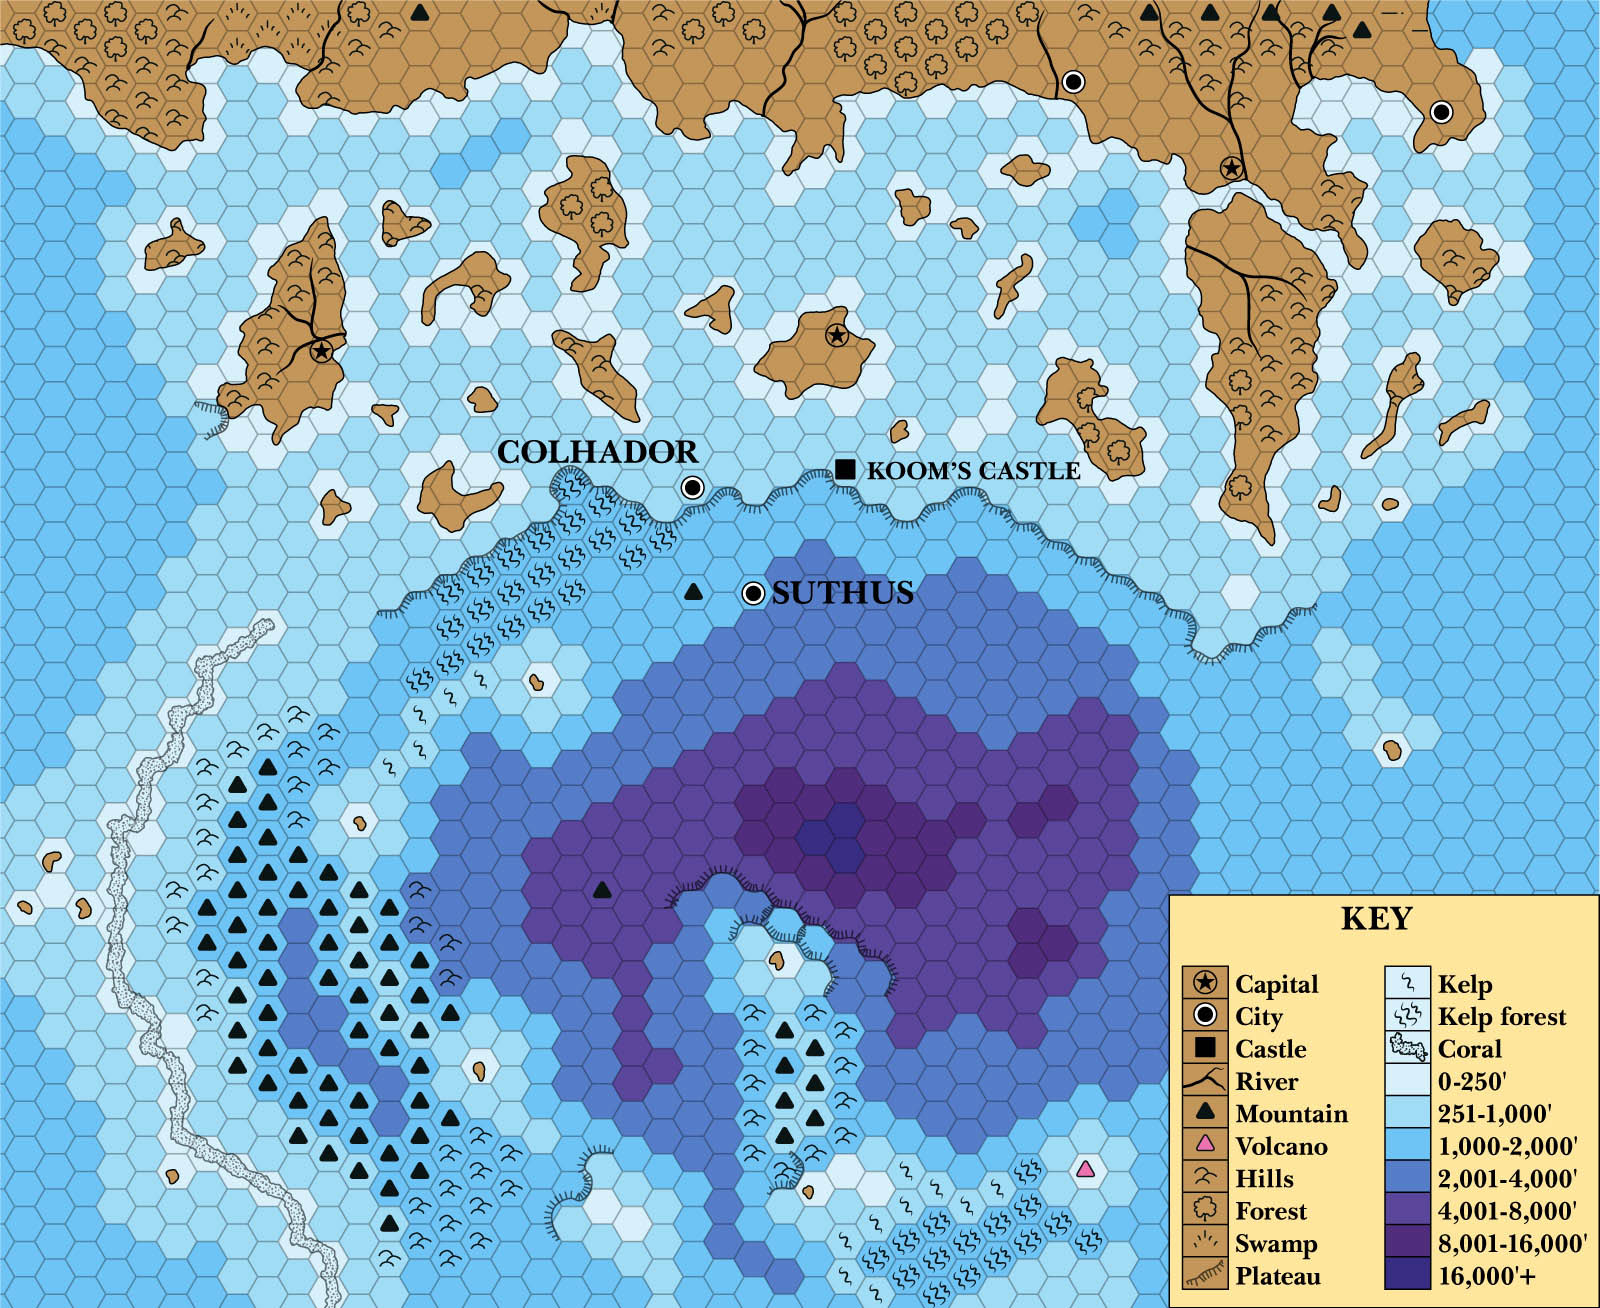 X7 Sea of Dread, 24 miles per hex | Atlas of Mystara